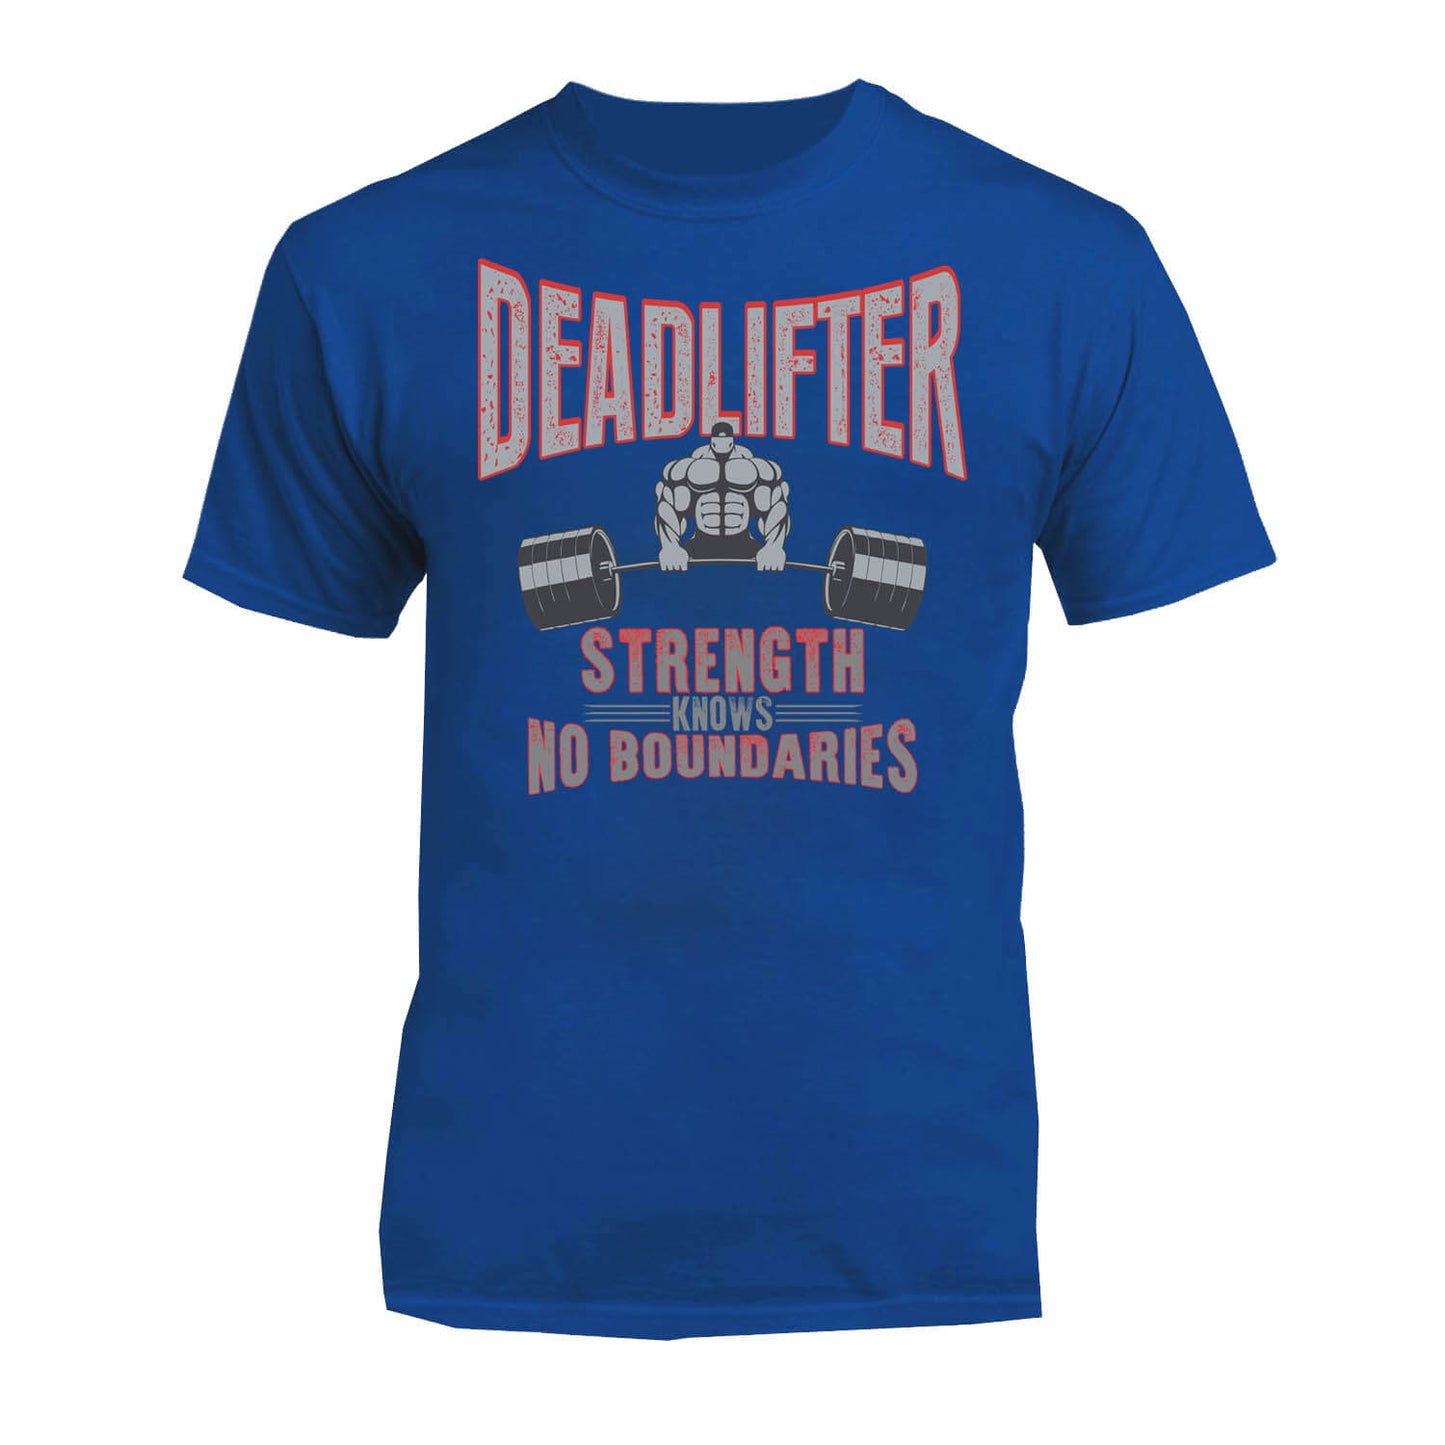 Deadlifter Strength knows No Boundaries